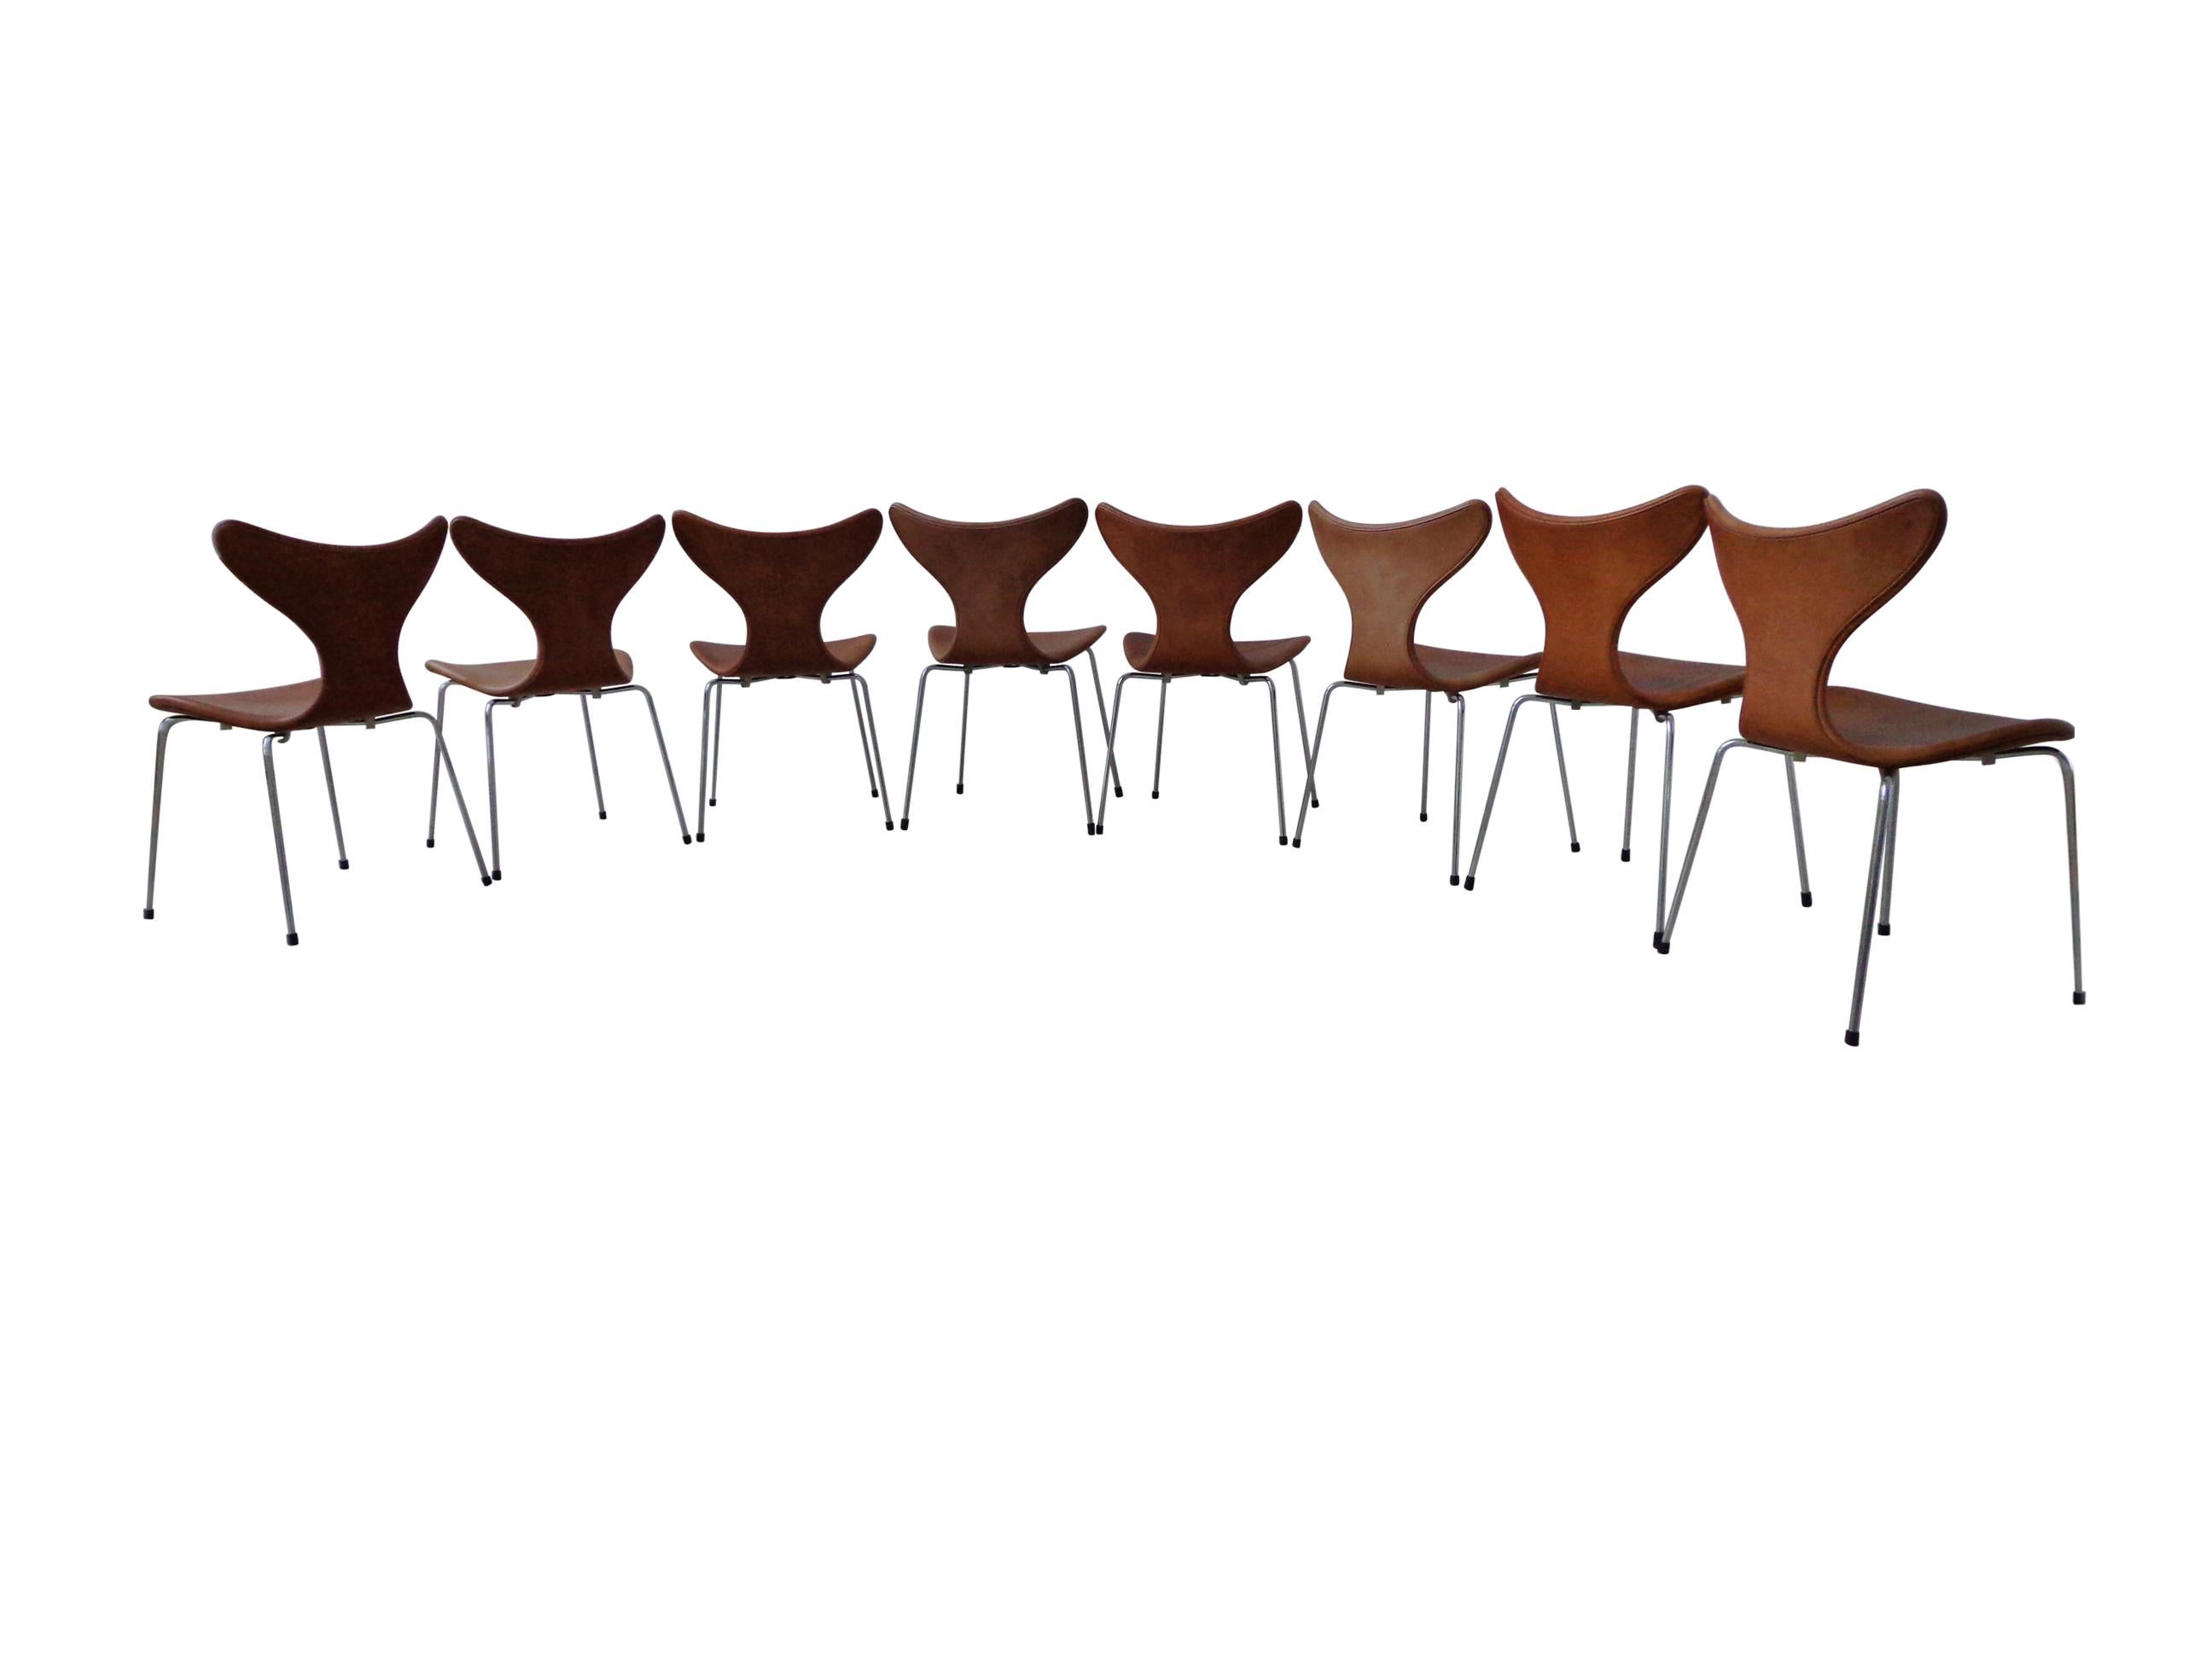 Steel Arne Jacobsen Dining Chairs Cognac Leather Model Lily 1970s Fritz Hansen Denmark